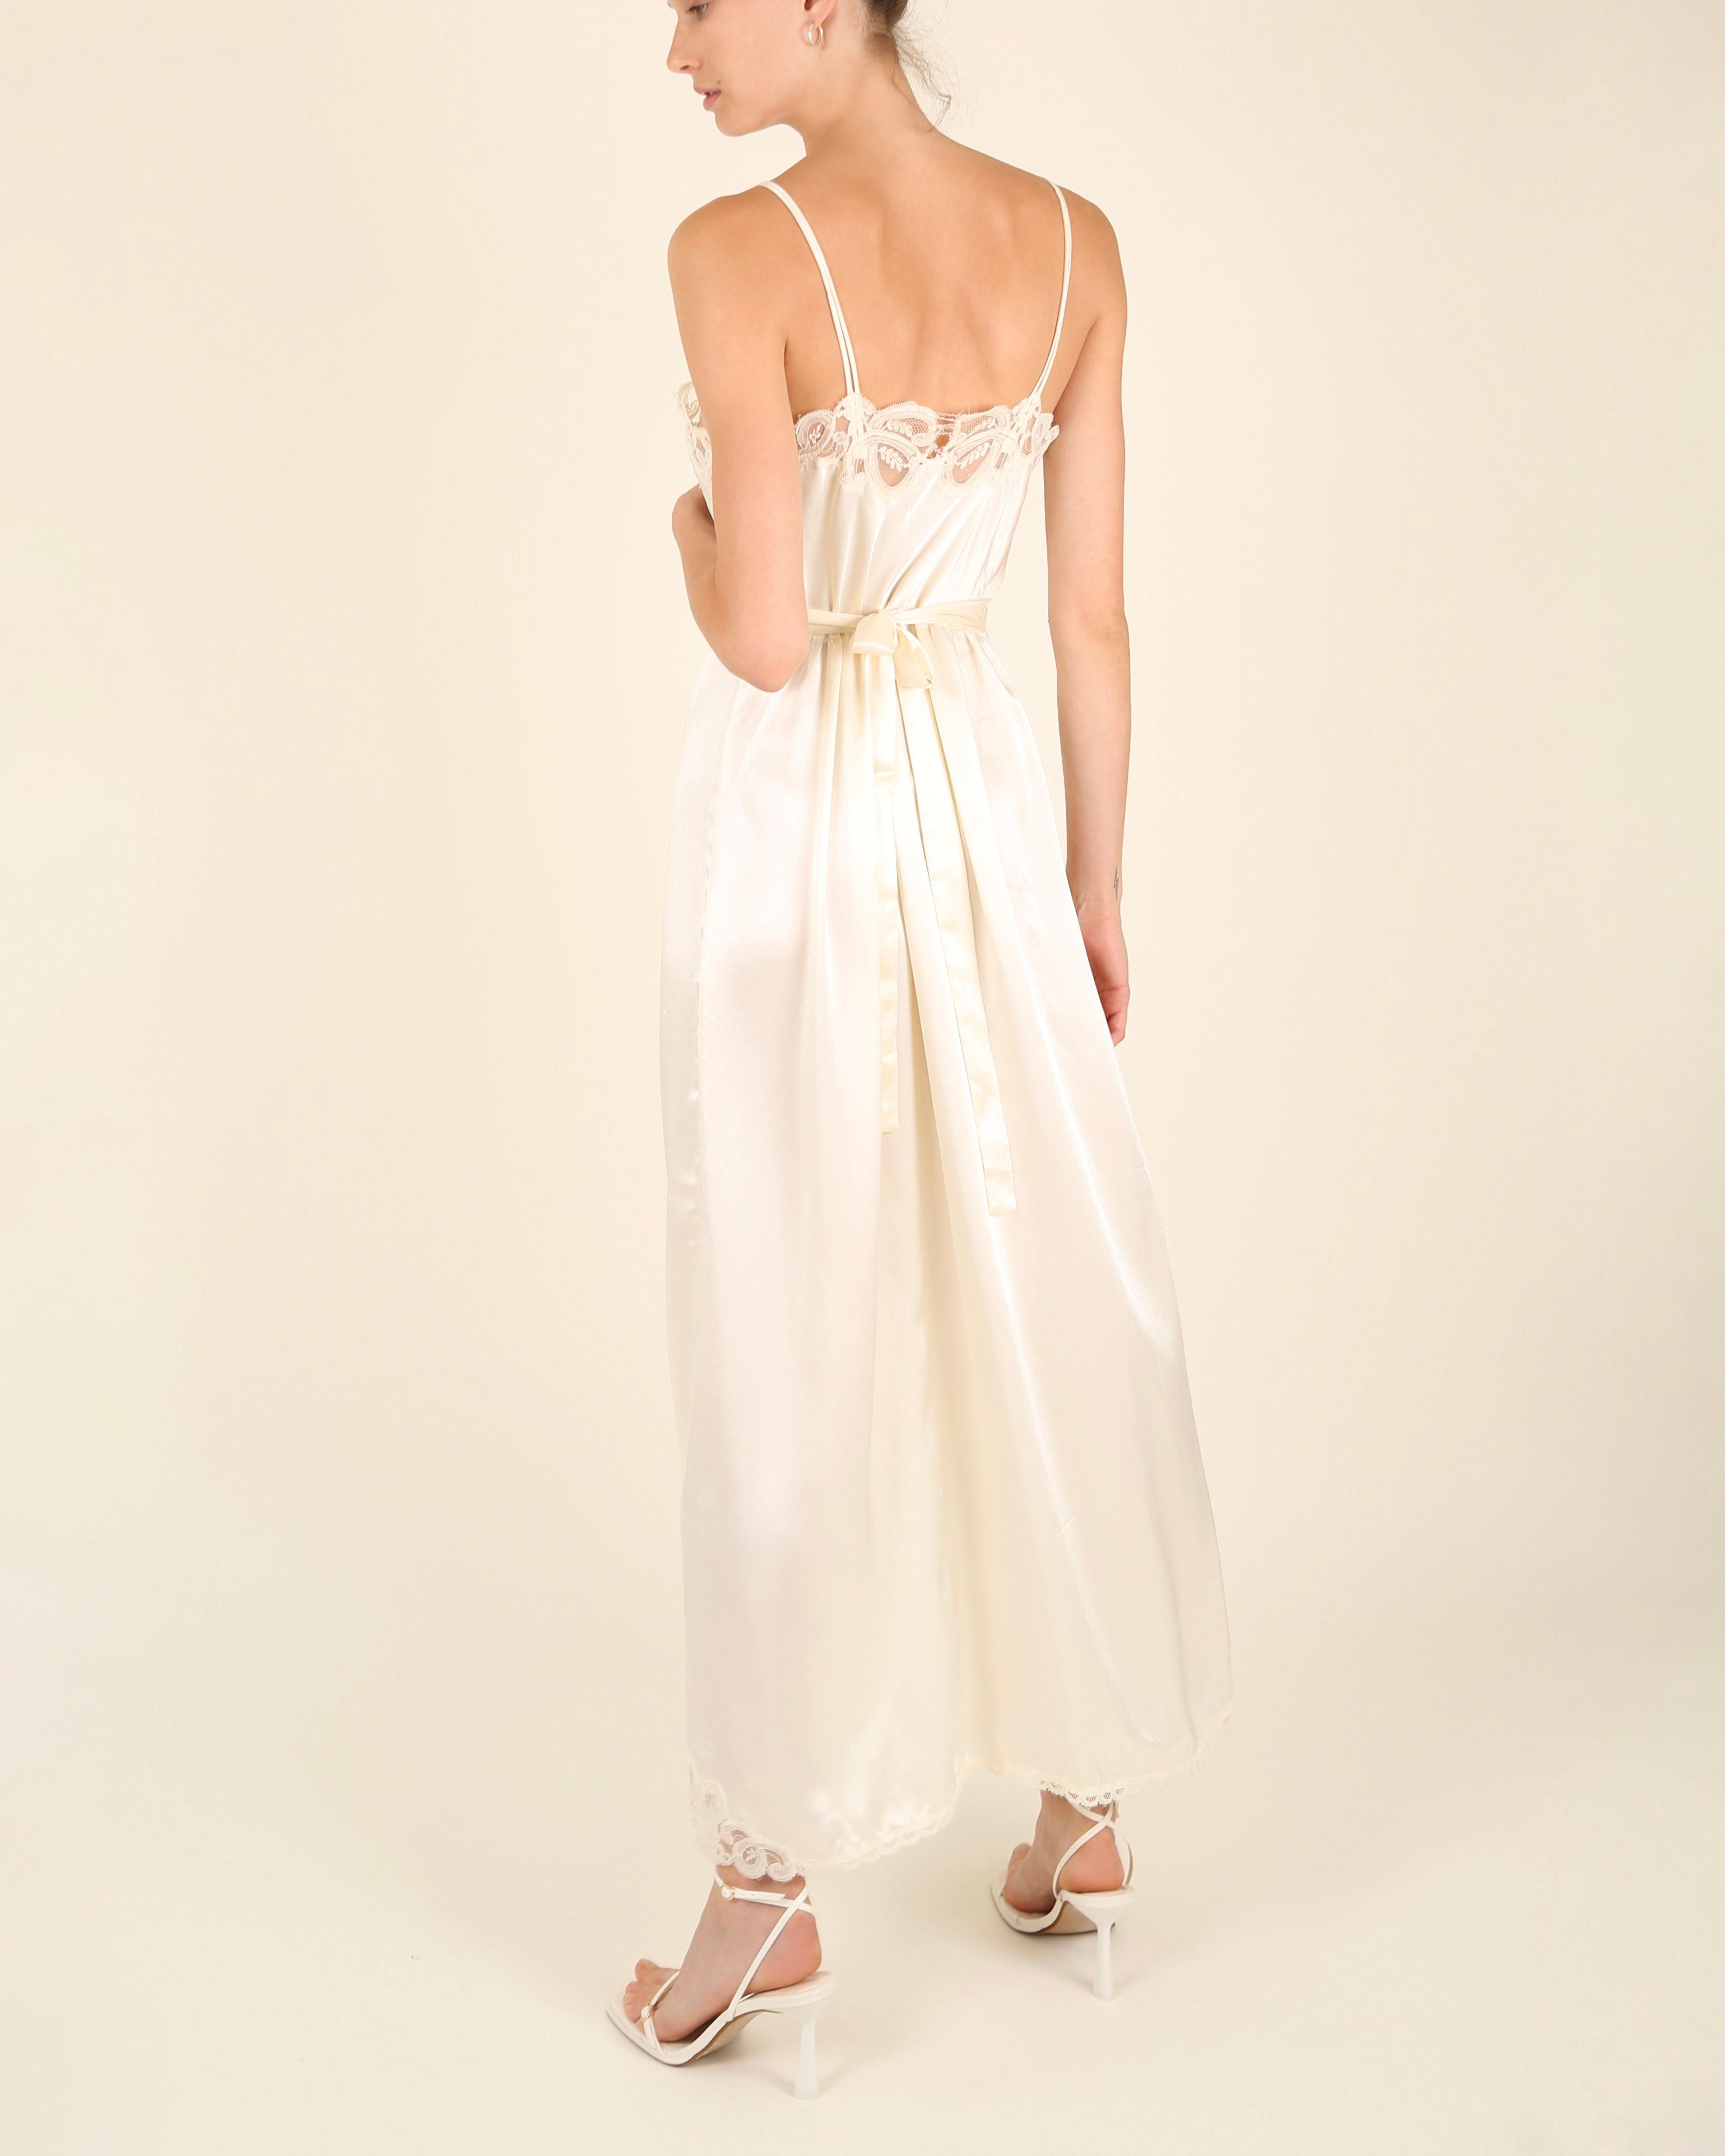 Eve Stillman vintage silk ivory cream lace slit night gown slip wedding dress 13